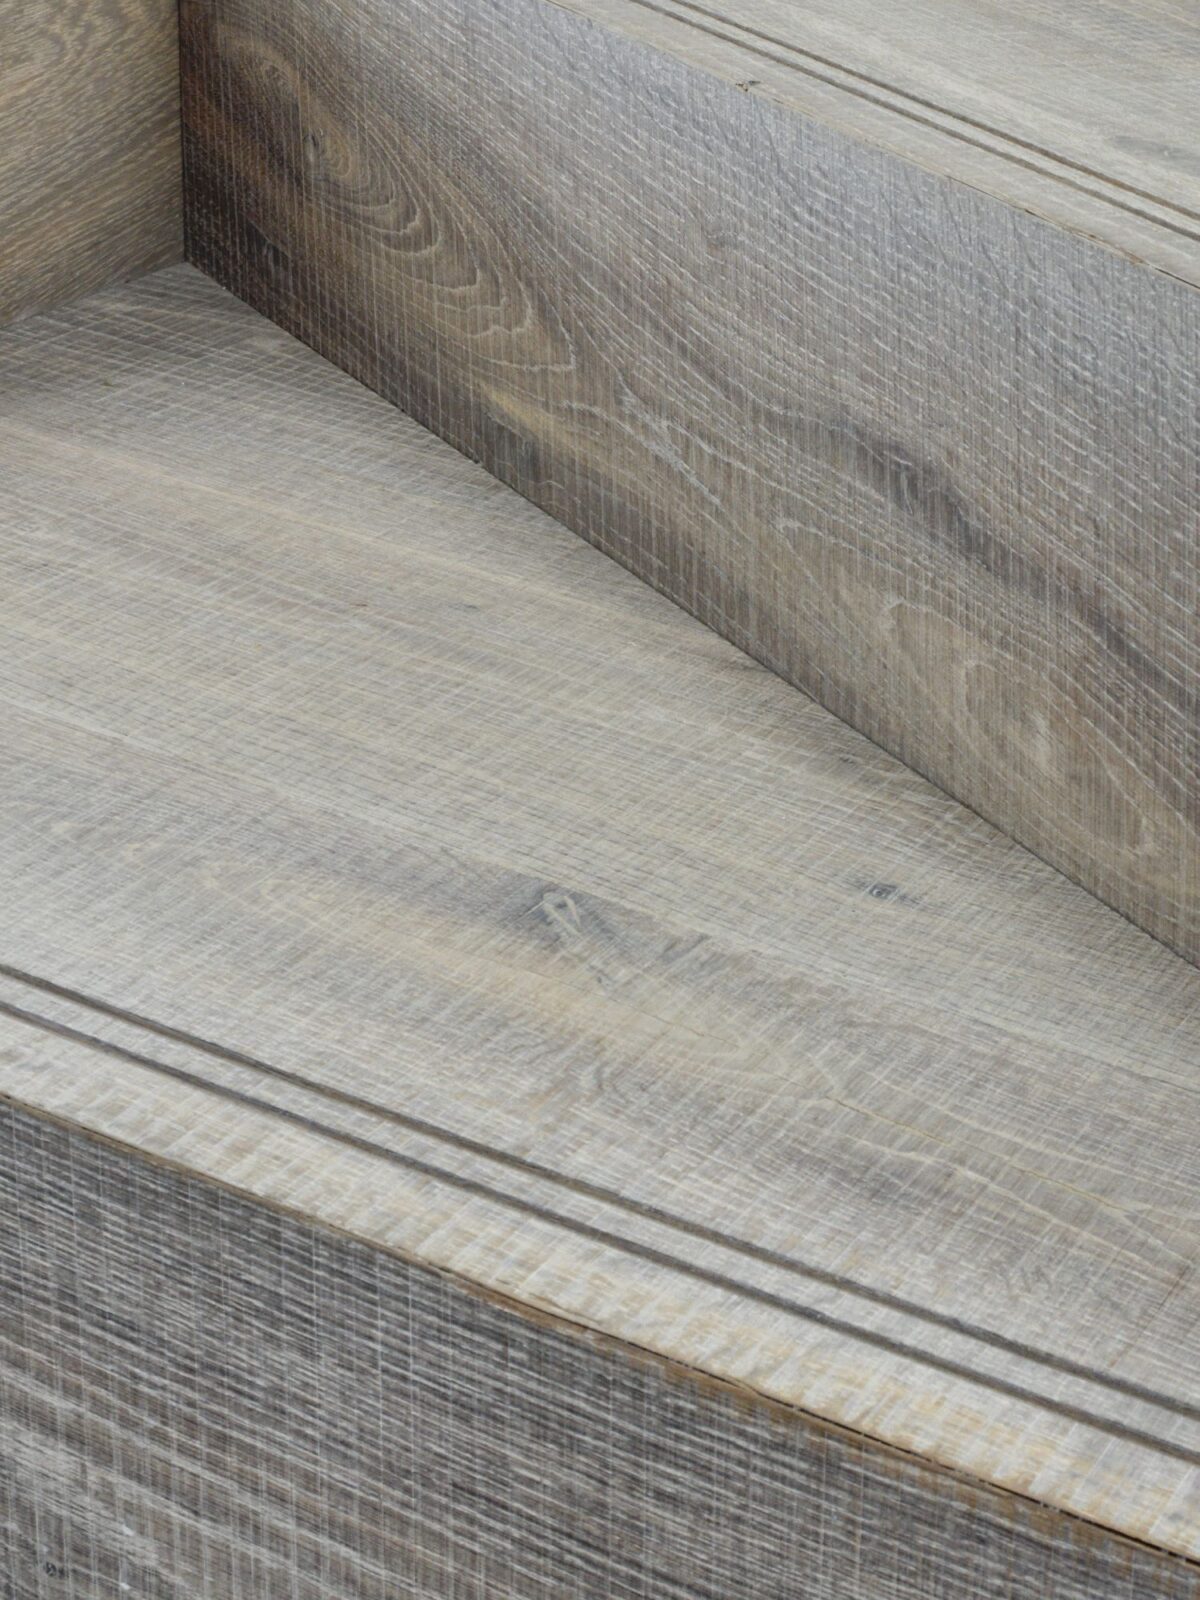 Oak Tate Tiree stair detail with metal strips